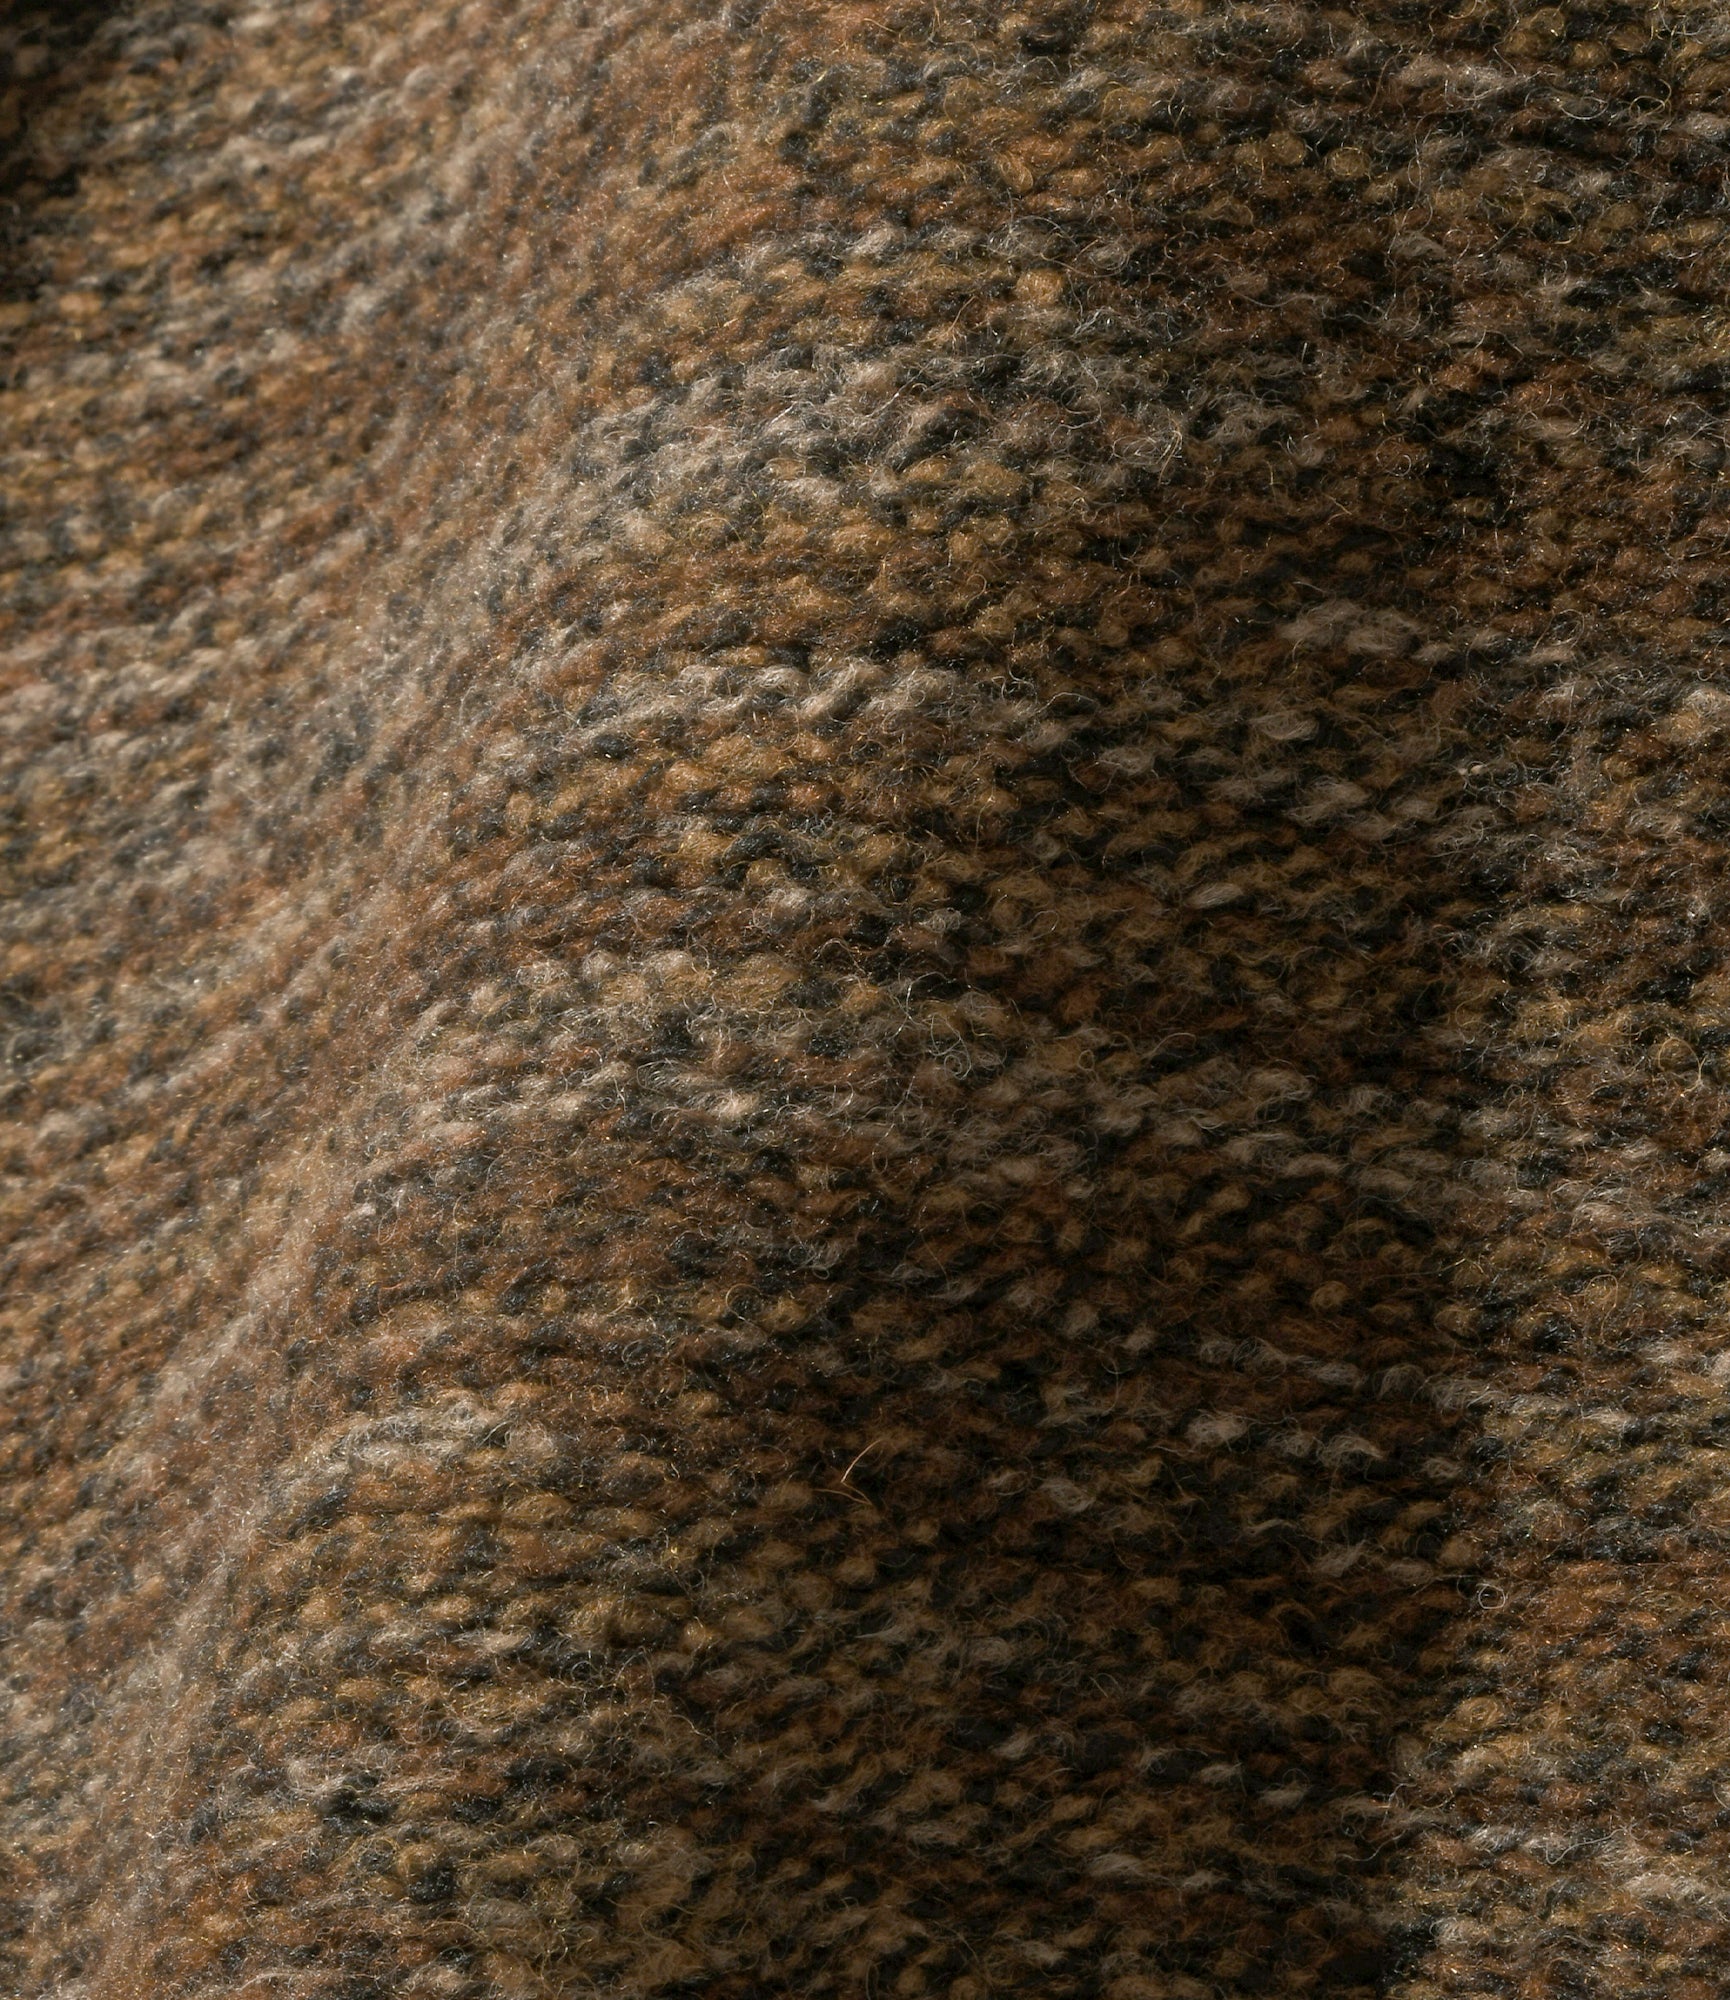 Engineered Garments High Mock Knit Vest - Brown  Poly Wool Melange Knit